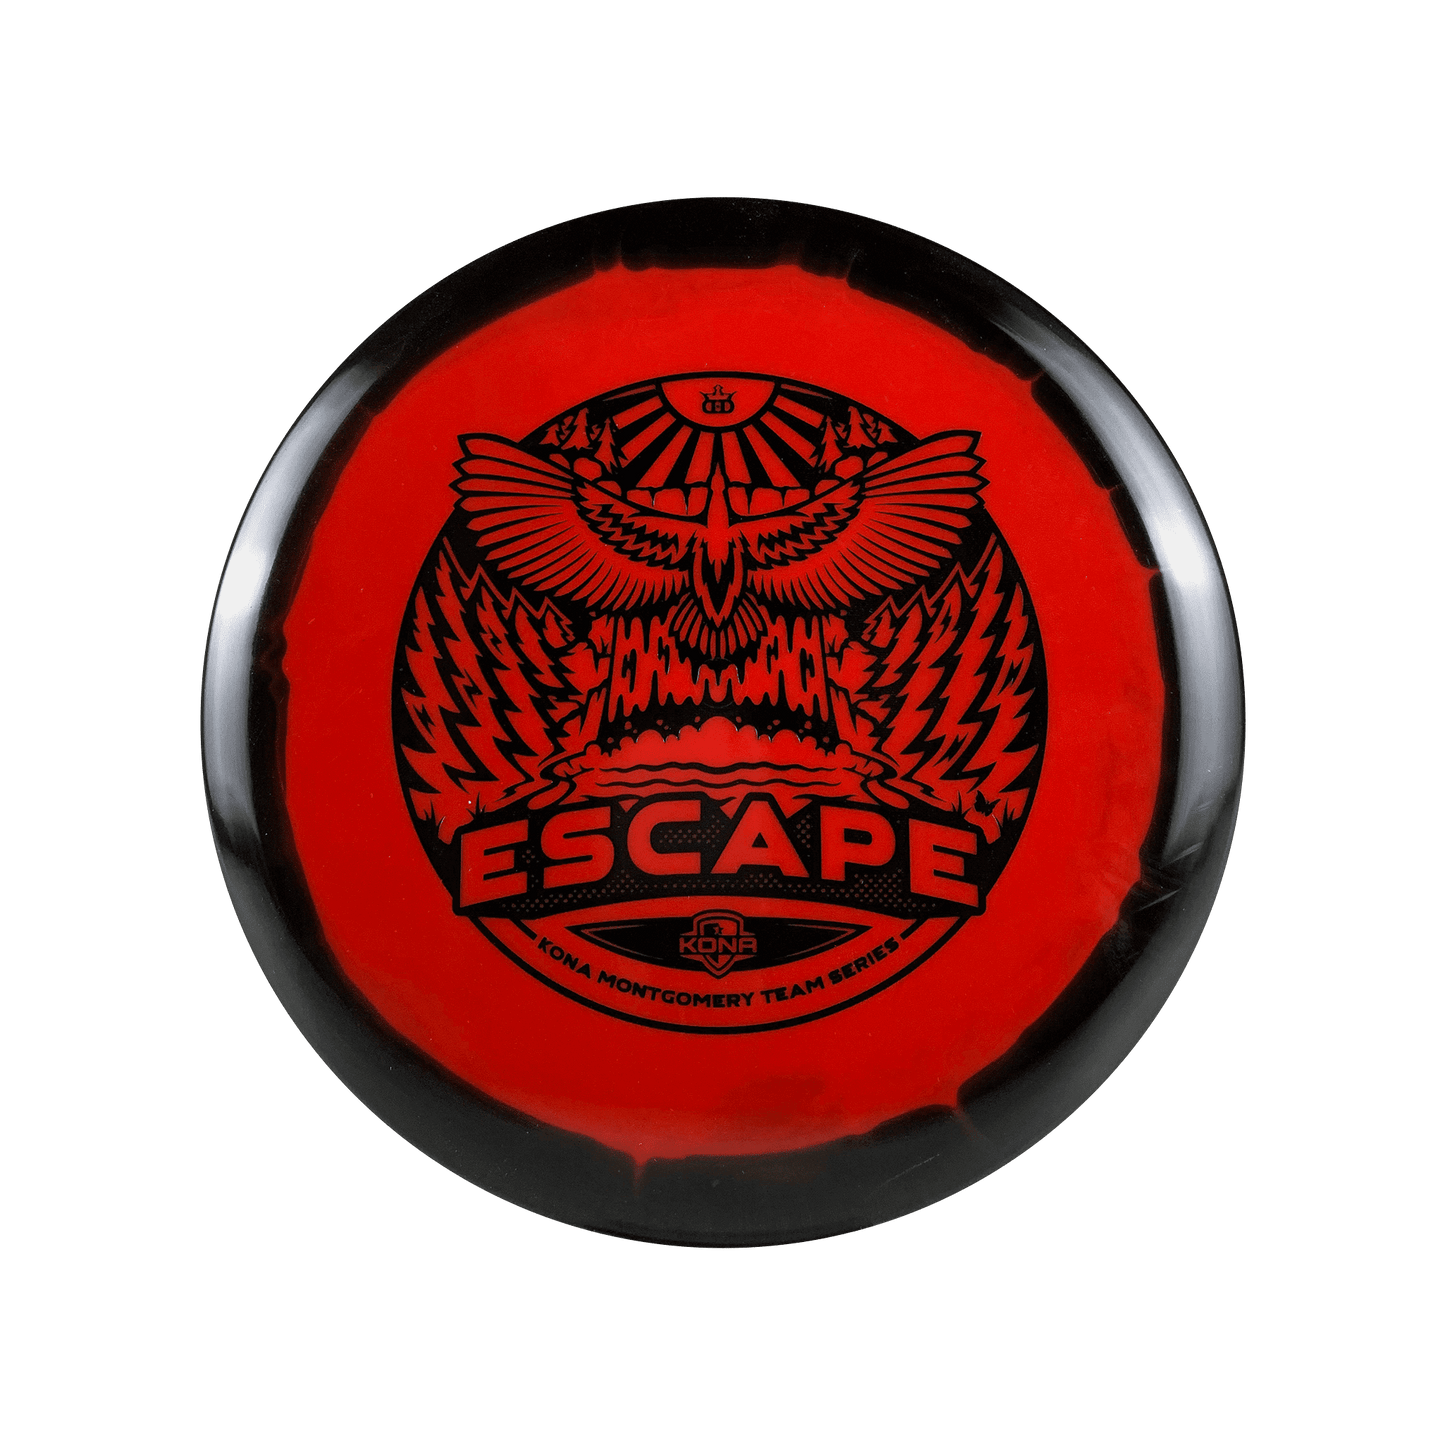 Fuzion Orbit Escape - Kona Montgomery Team Series Disc Dynamic Discs multi / red 175 